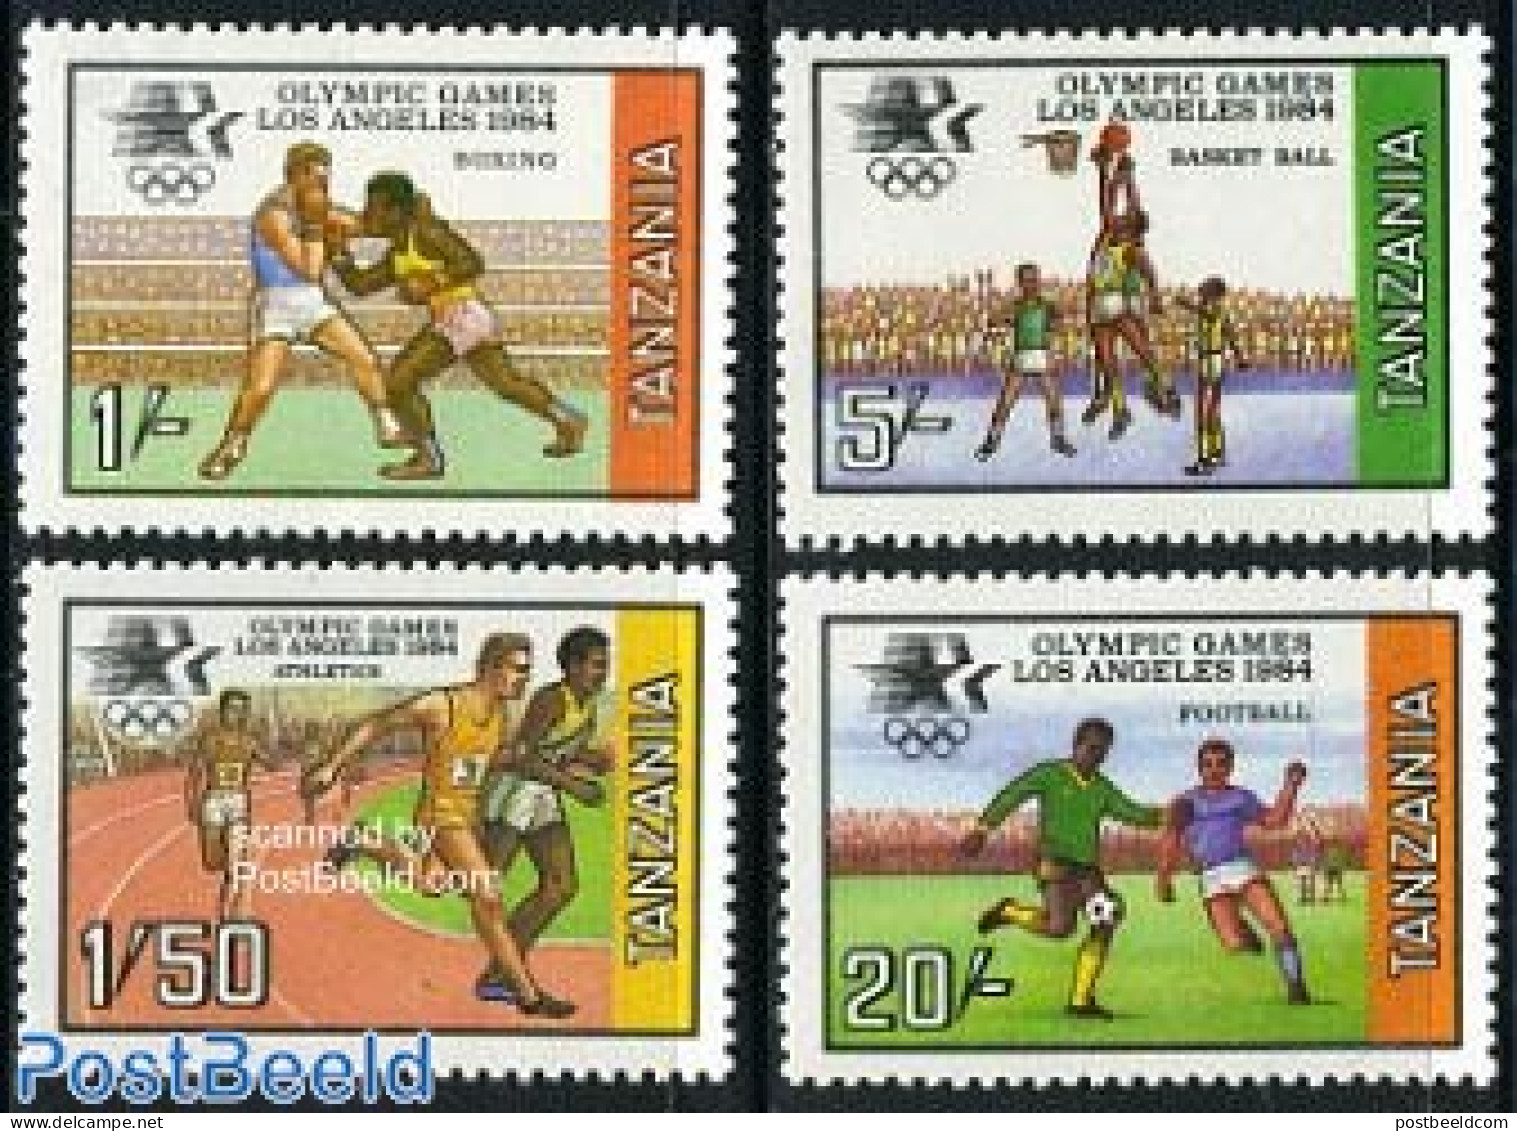 Tanzania 1984 Olympic Games Los Angeles 4v, Mint NH, Sport - Athletics - Basketball - Boxing - Football - Olympic Games - Athletics